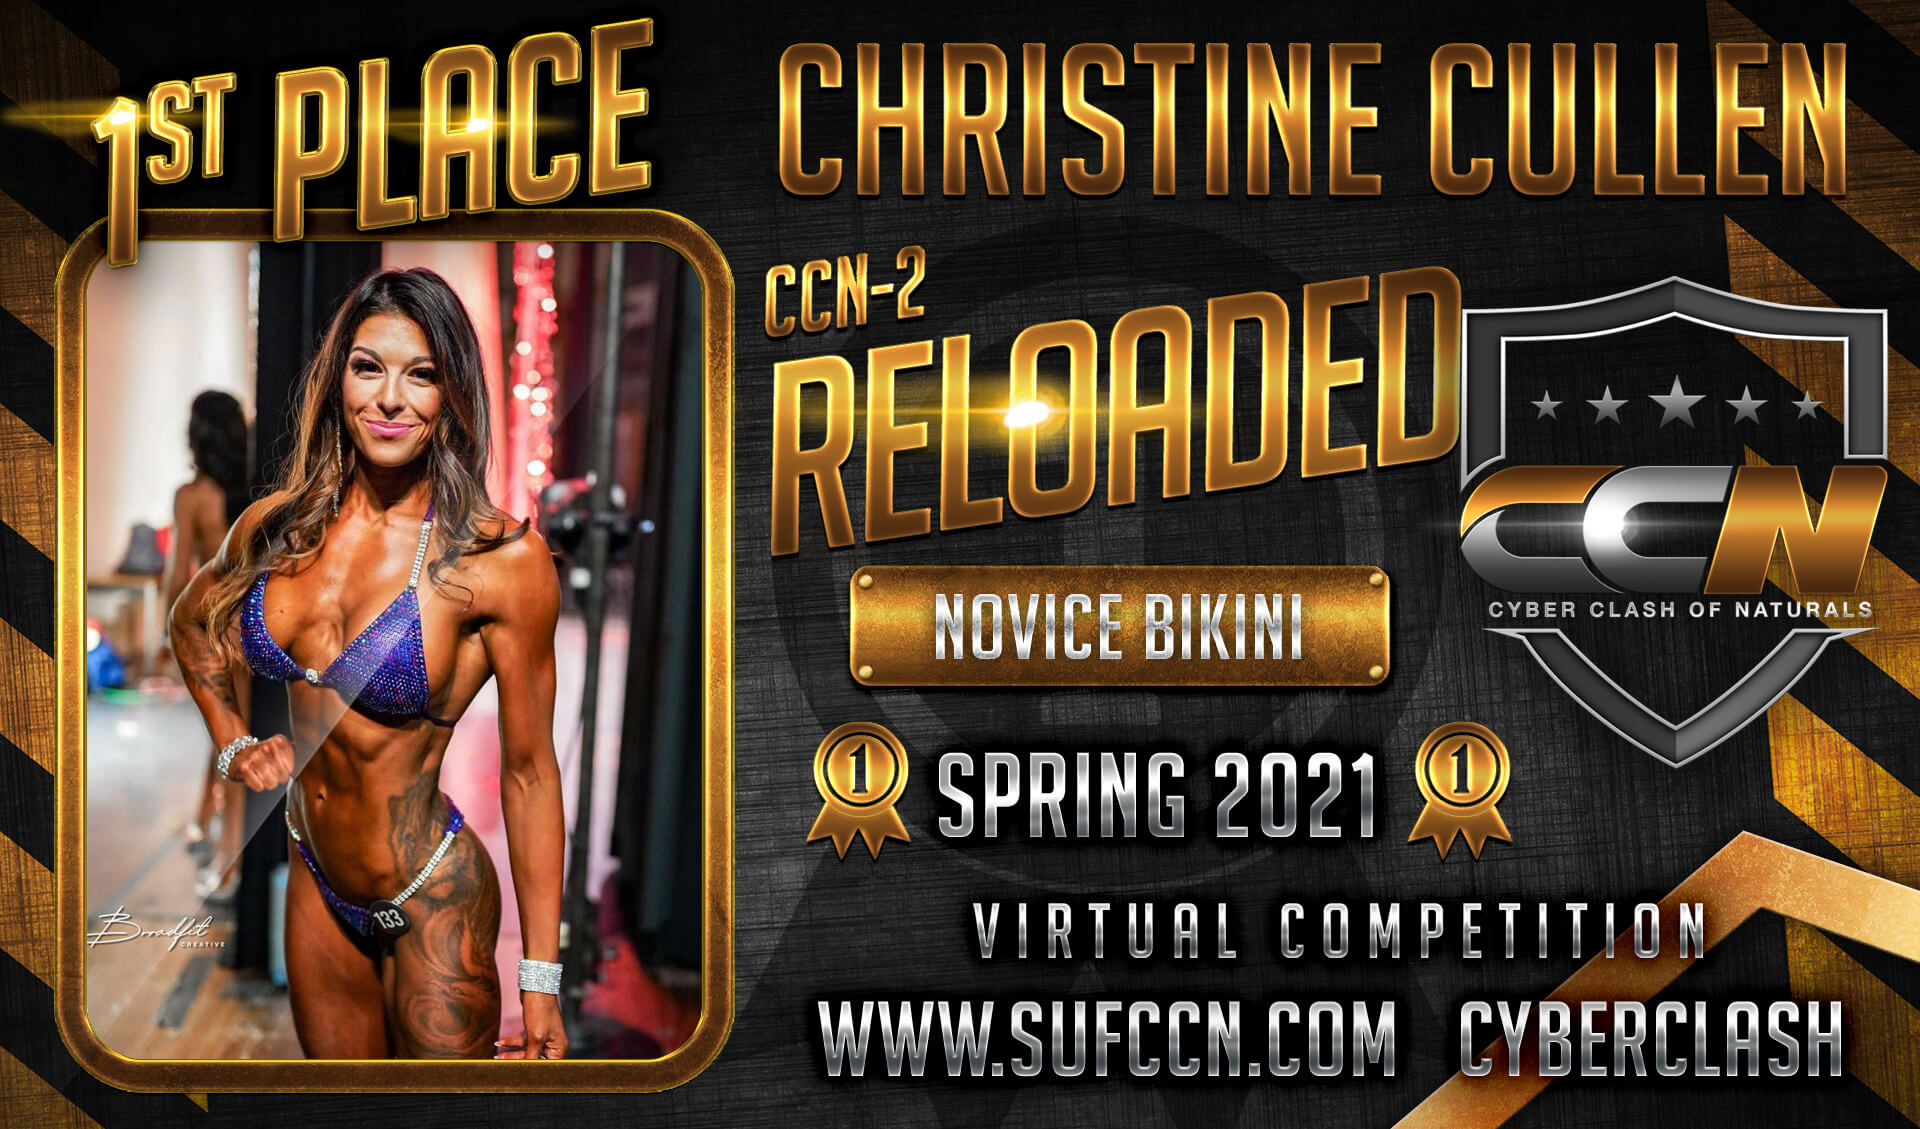 Christine-C-1st-place-banner-NOVICE-Bikini